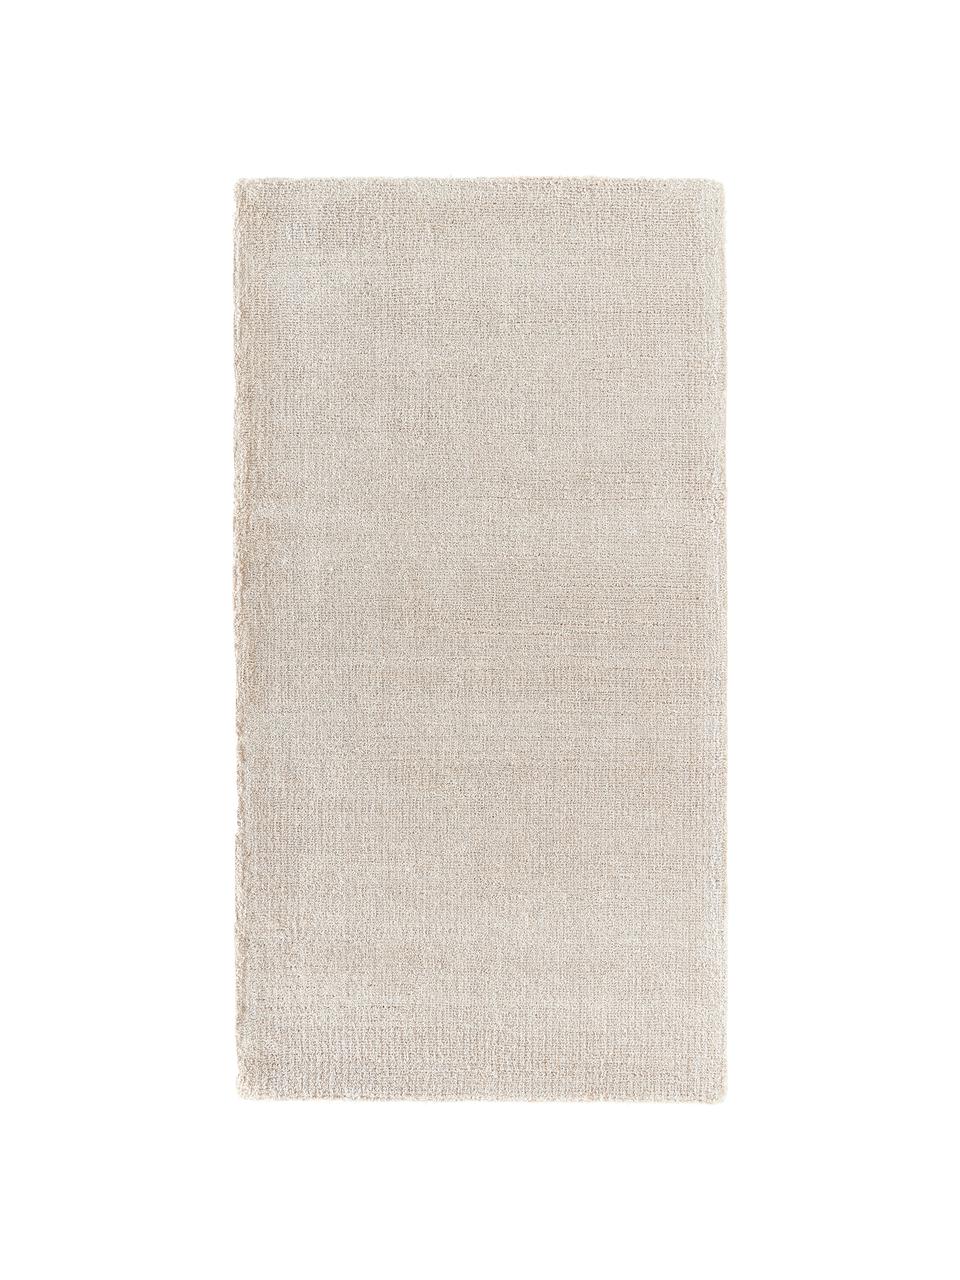 Handgewebter Kurzflor-Teppich Ainsley in Beige, 60 % Polyester, GRS-zertifiziert
40 % Wolle, Beige, B 80 x L 150 cm (Grösse XS)